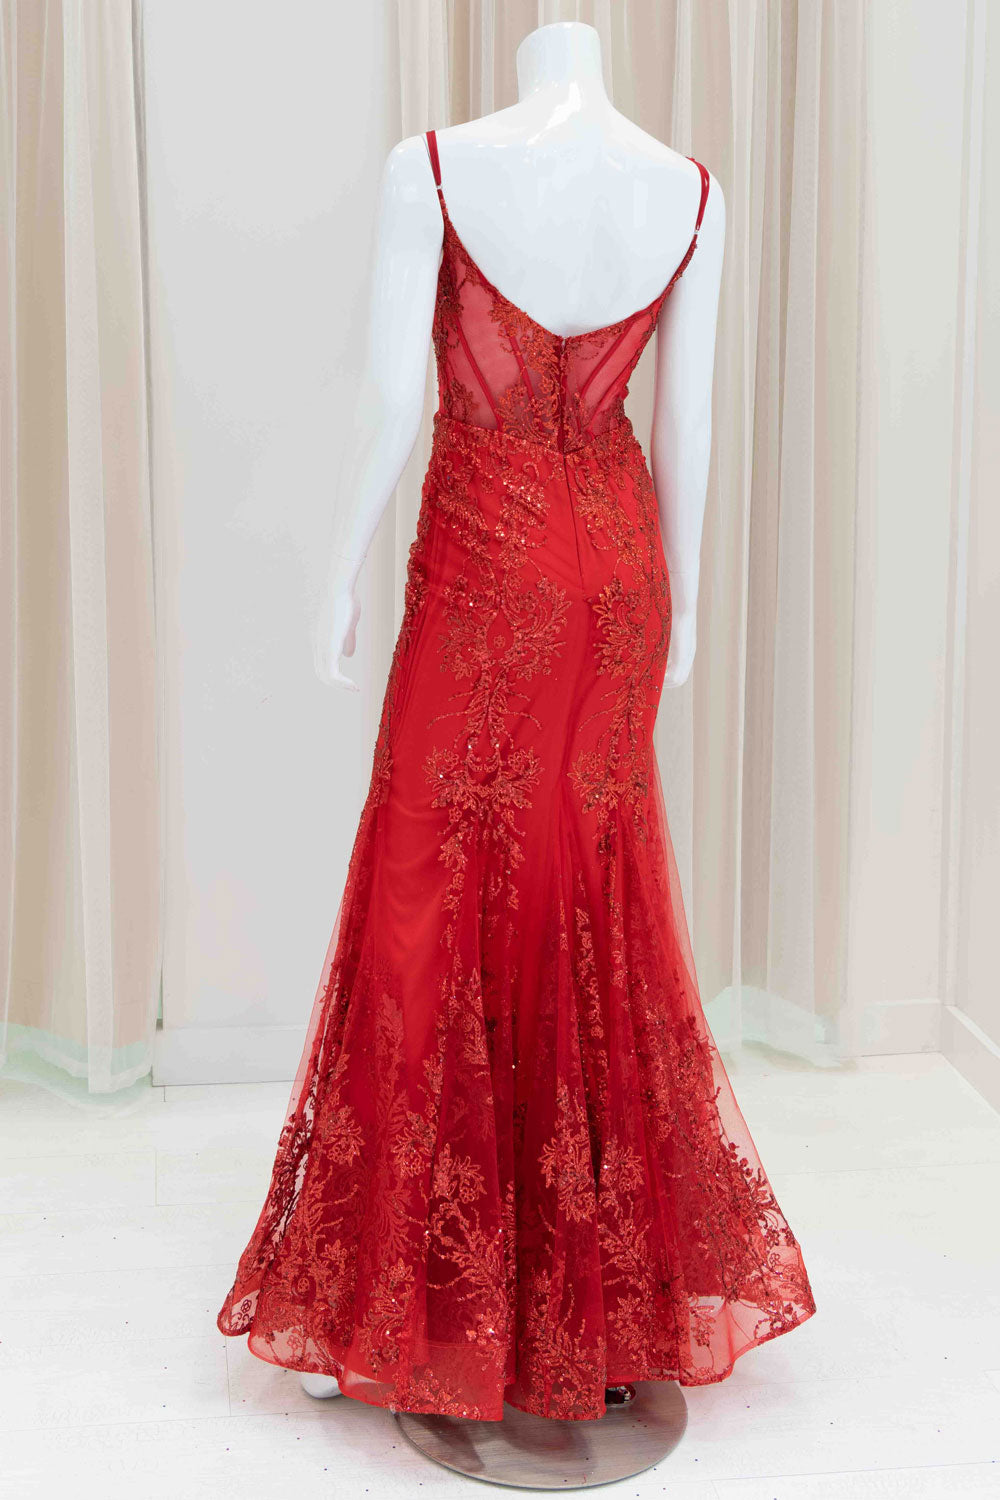 Darleena Marie Glitter Evening Gown in Red